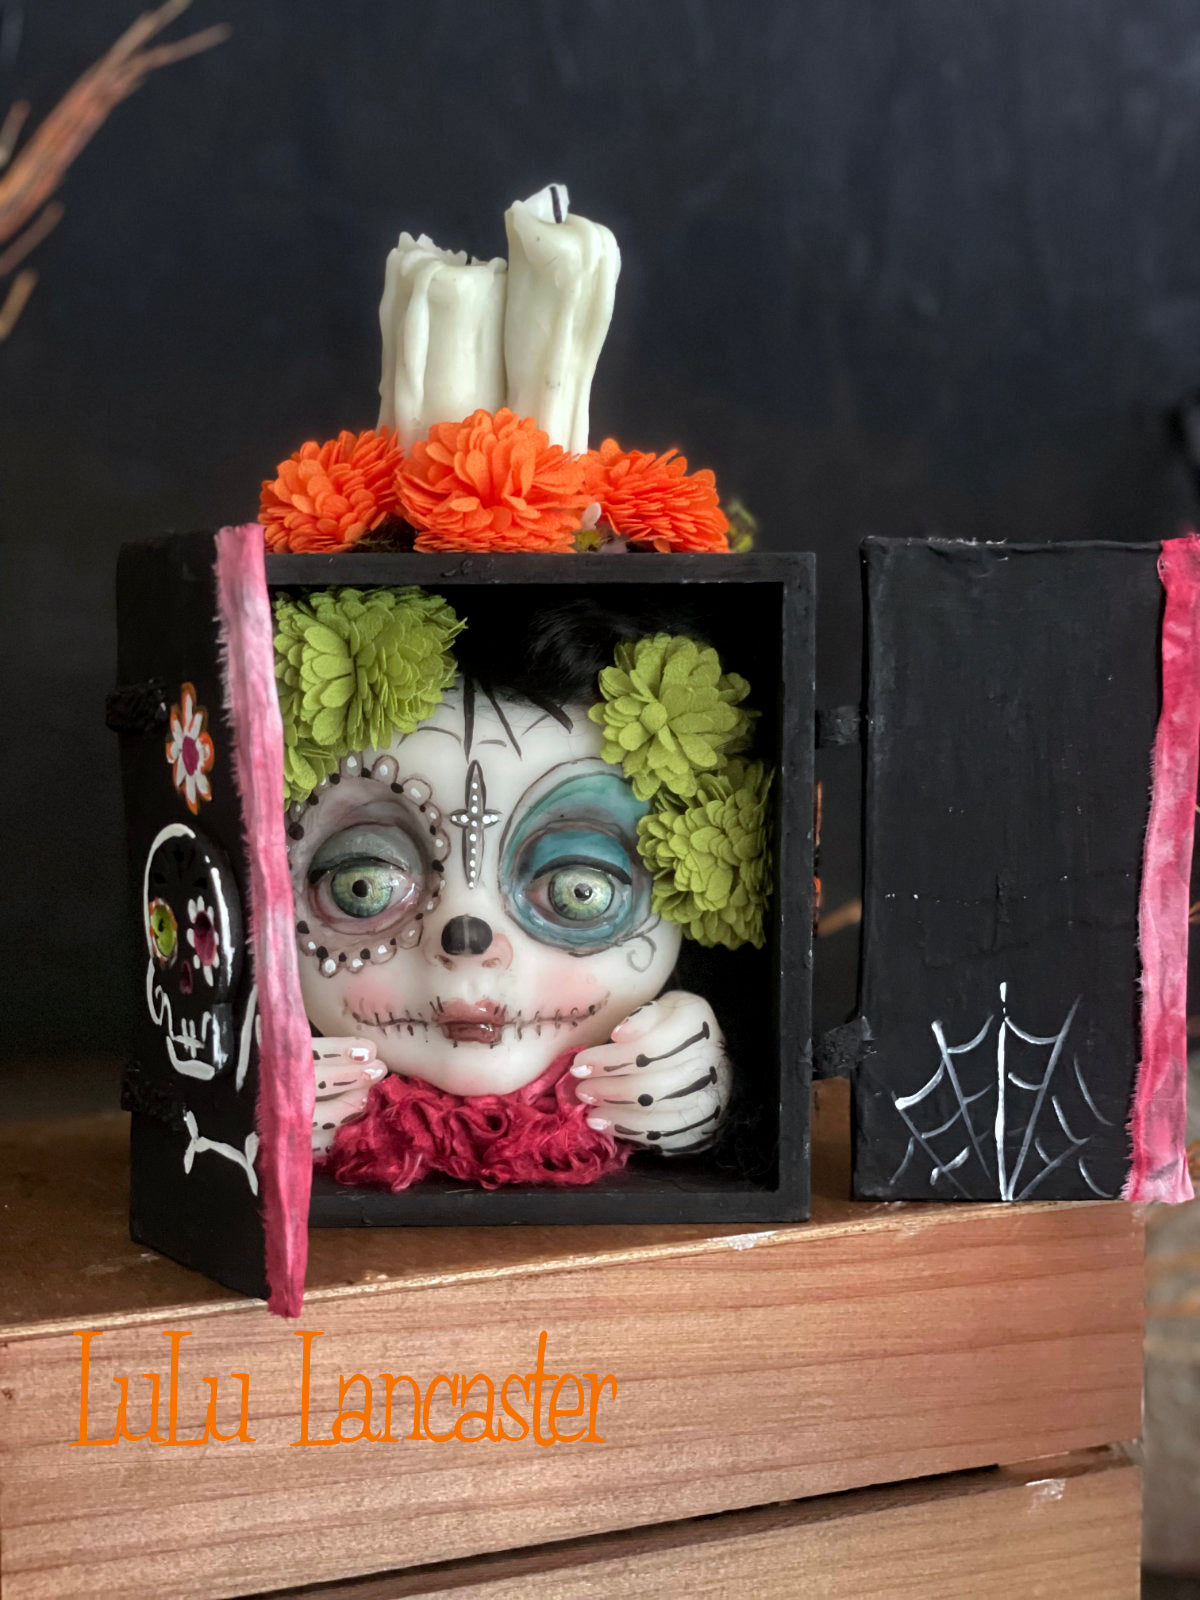 dia de muertos shrine box Original LuLu Lancaster Halloween Art Doll